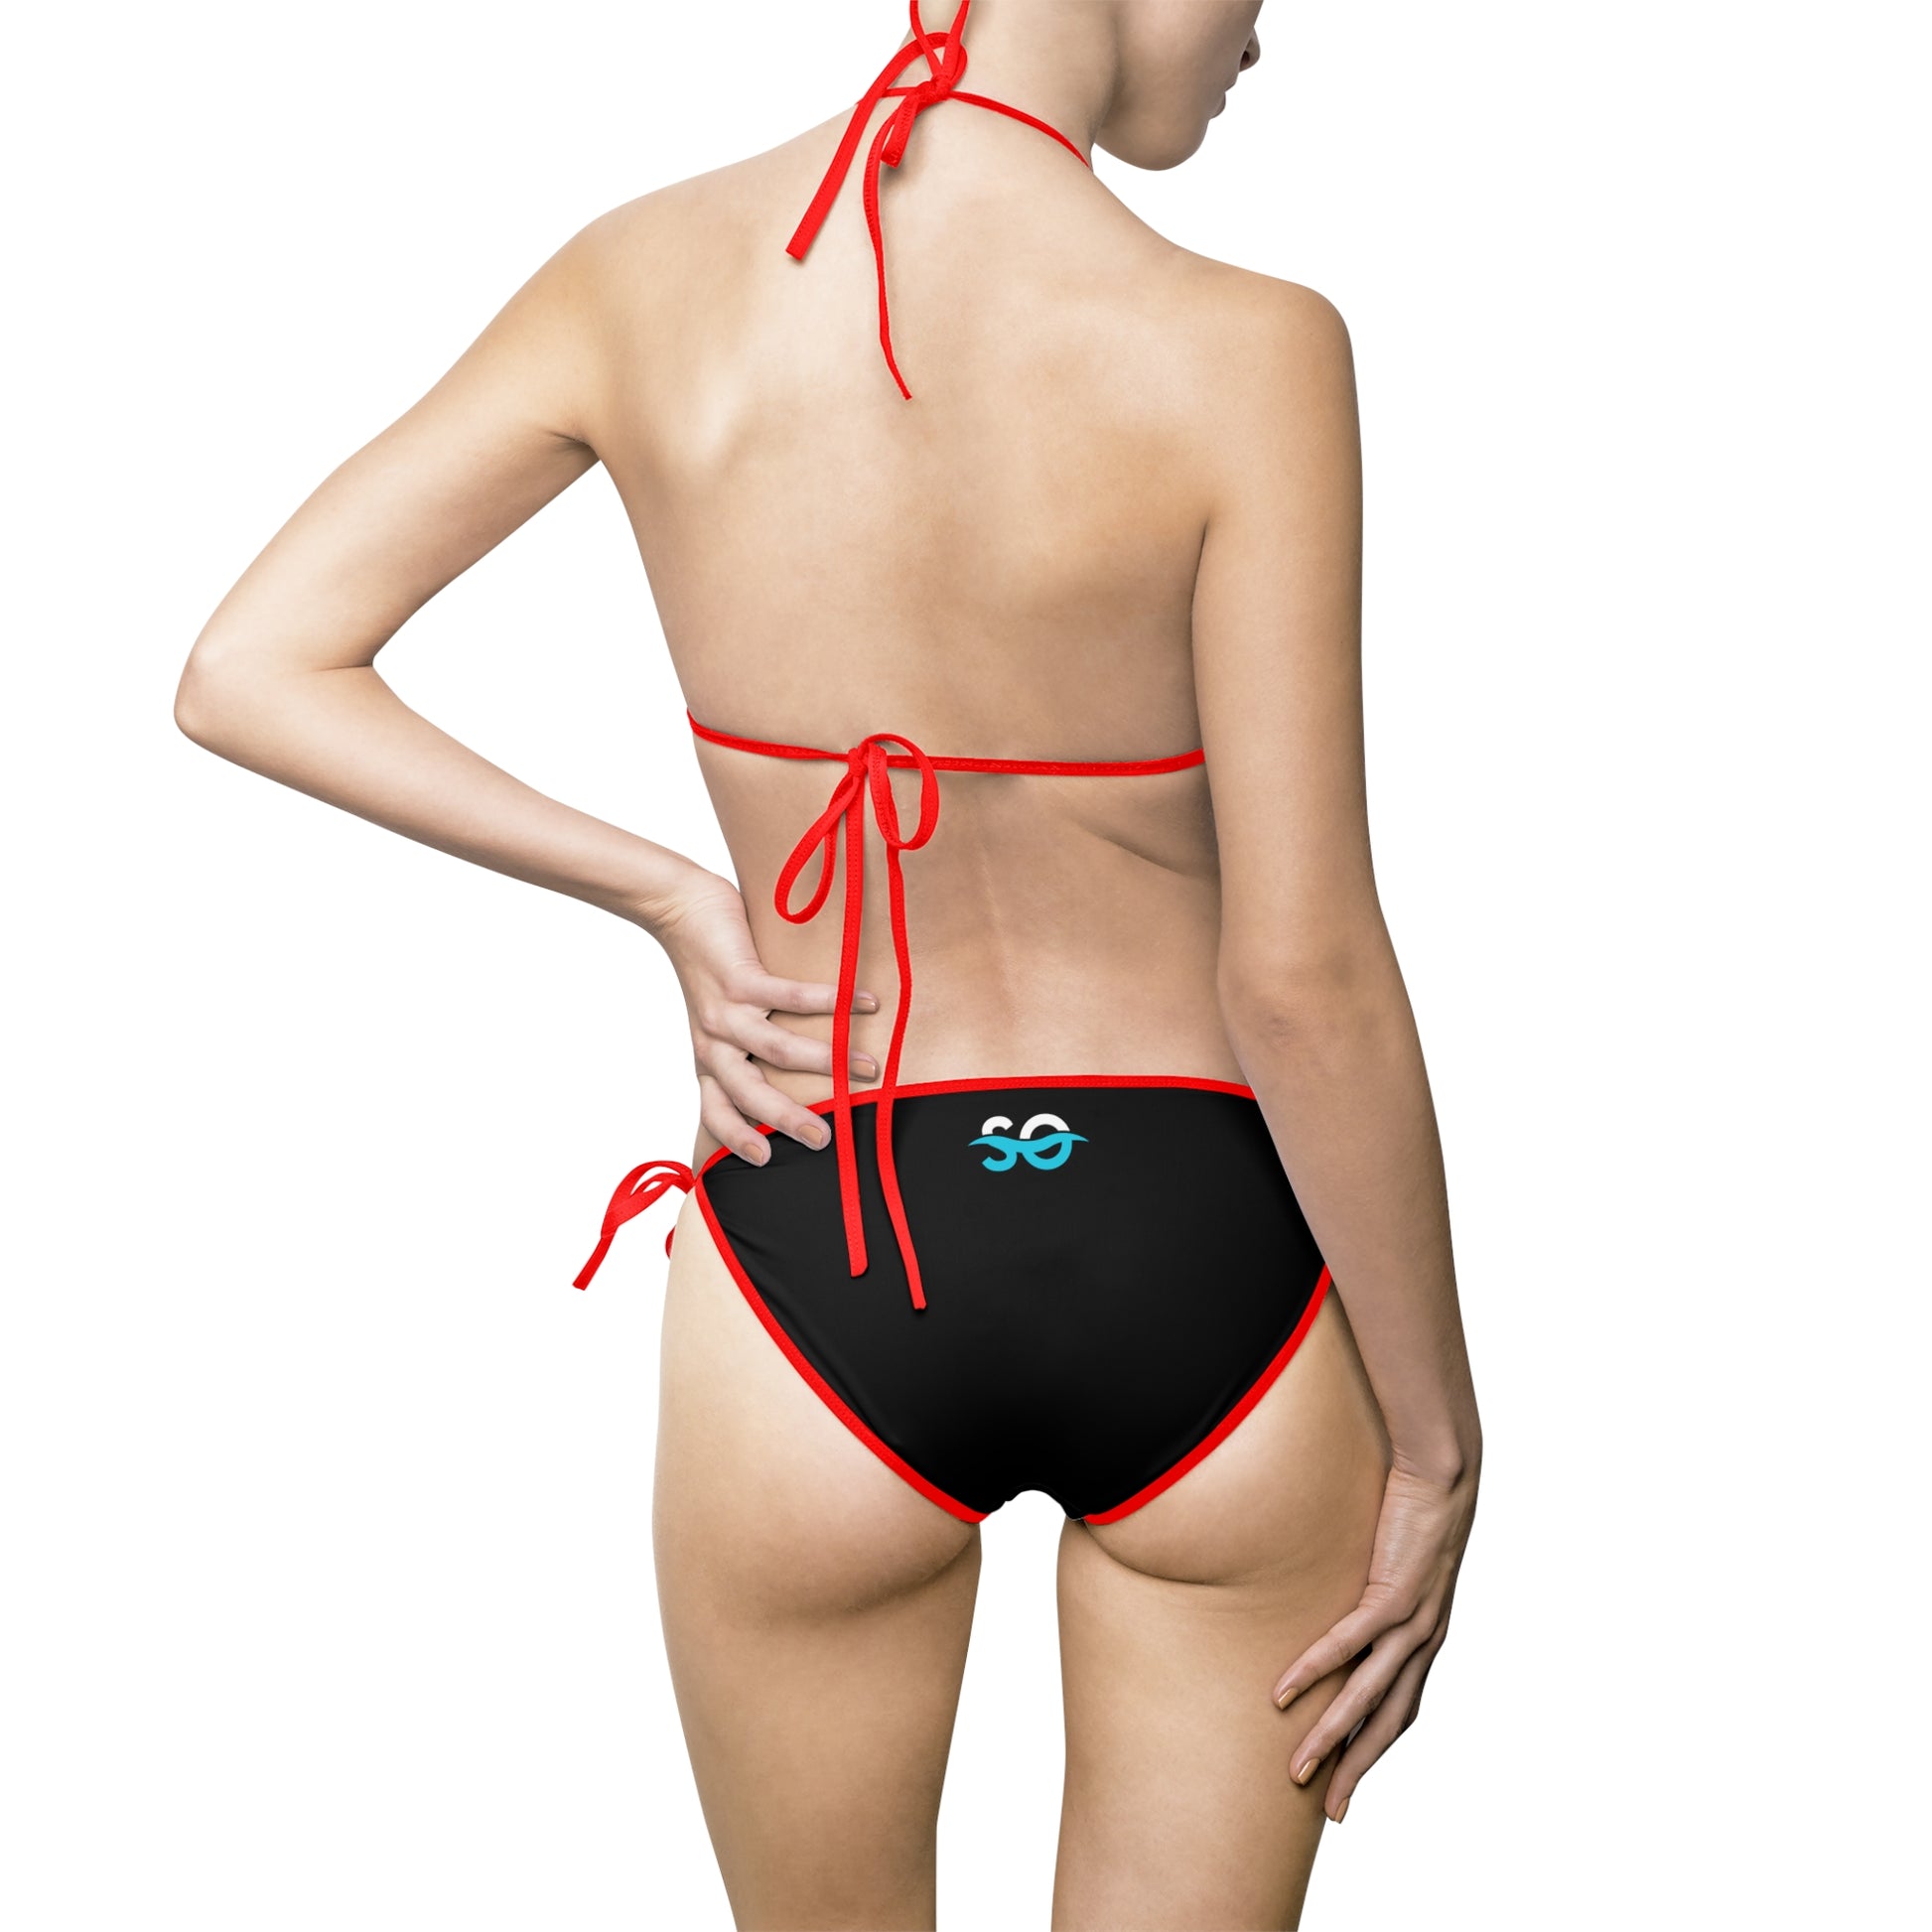 a woman in a black and red bikini bottom